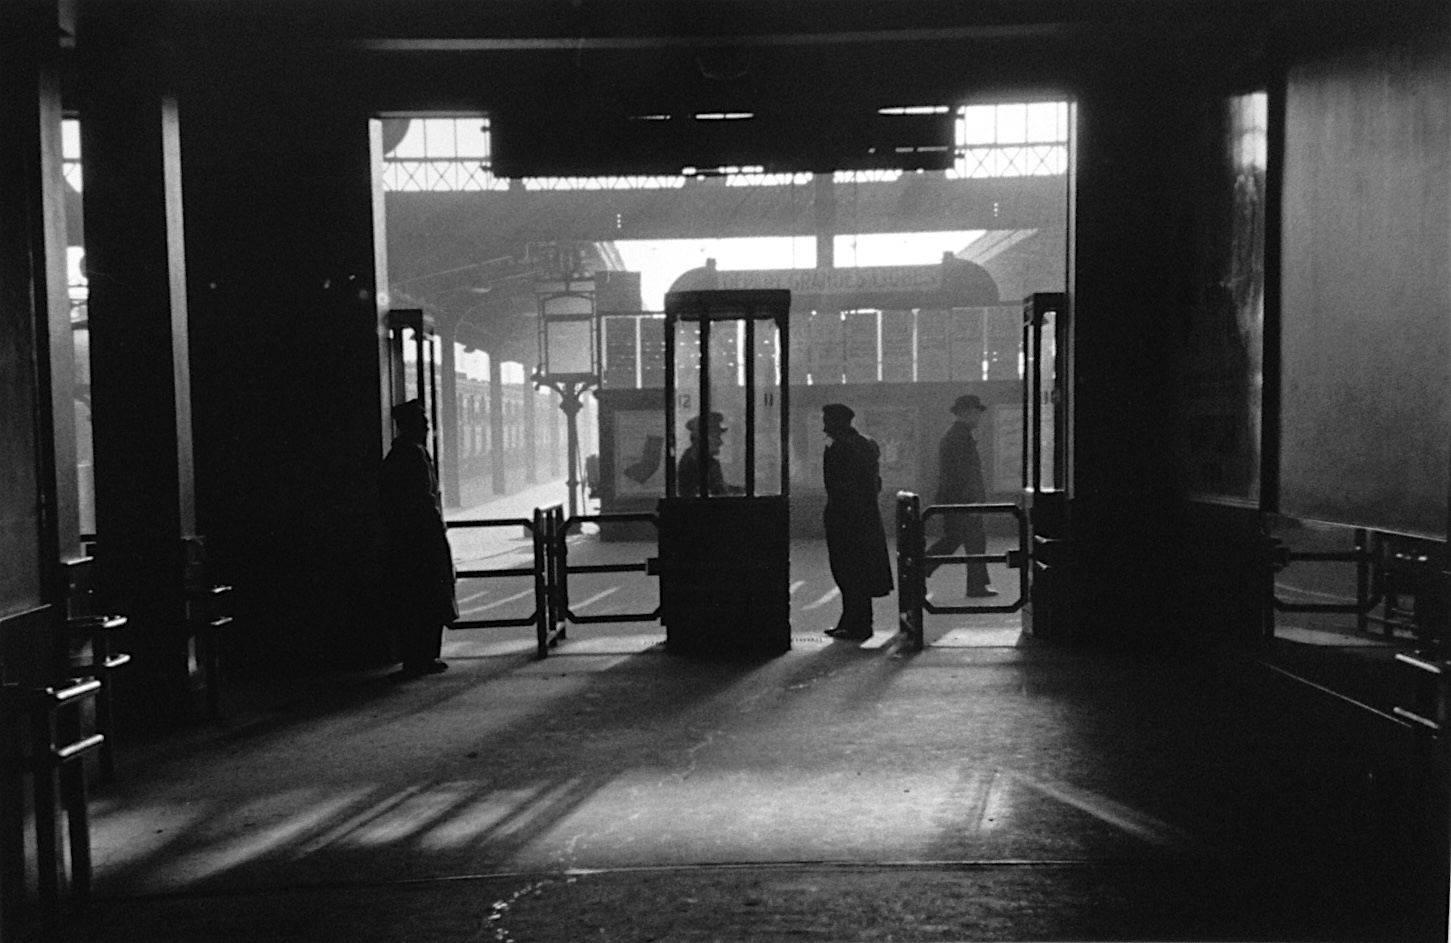 Sabine Weiss Black and White Photograph - Gare de Lyon, Paris